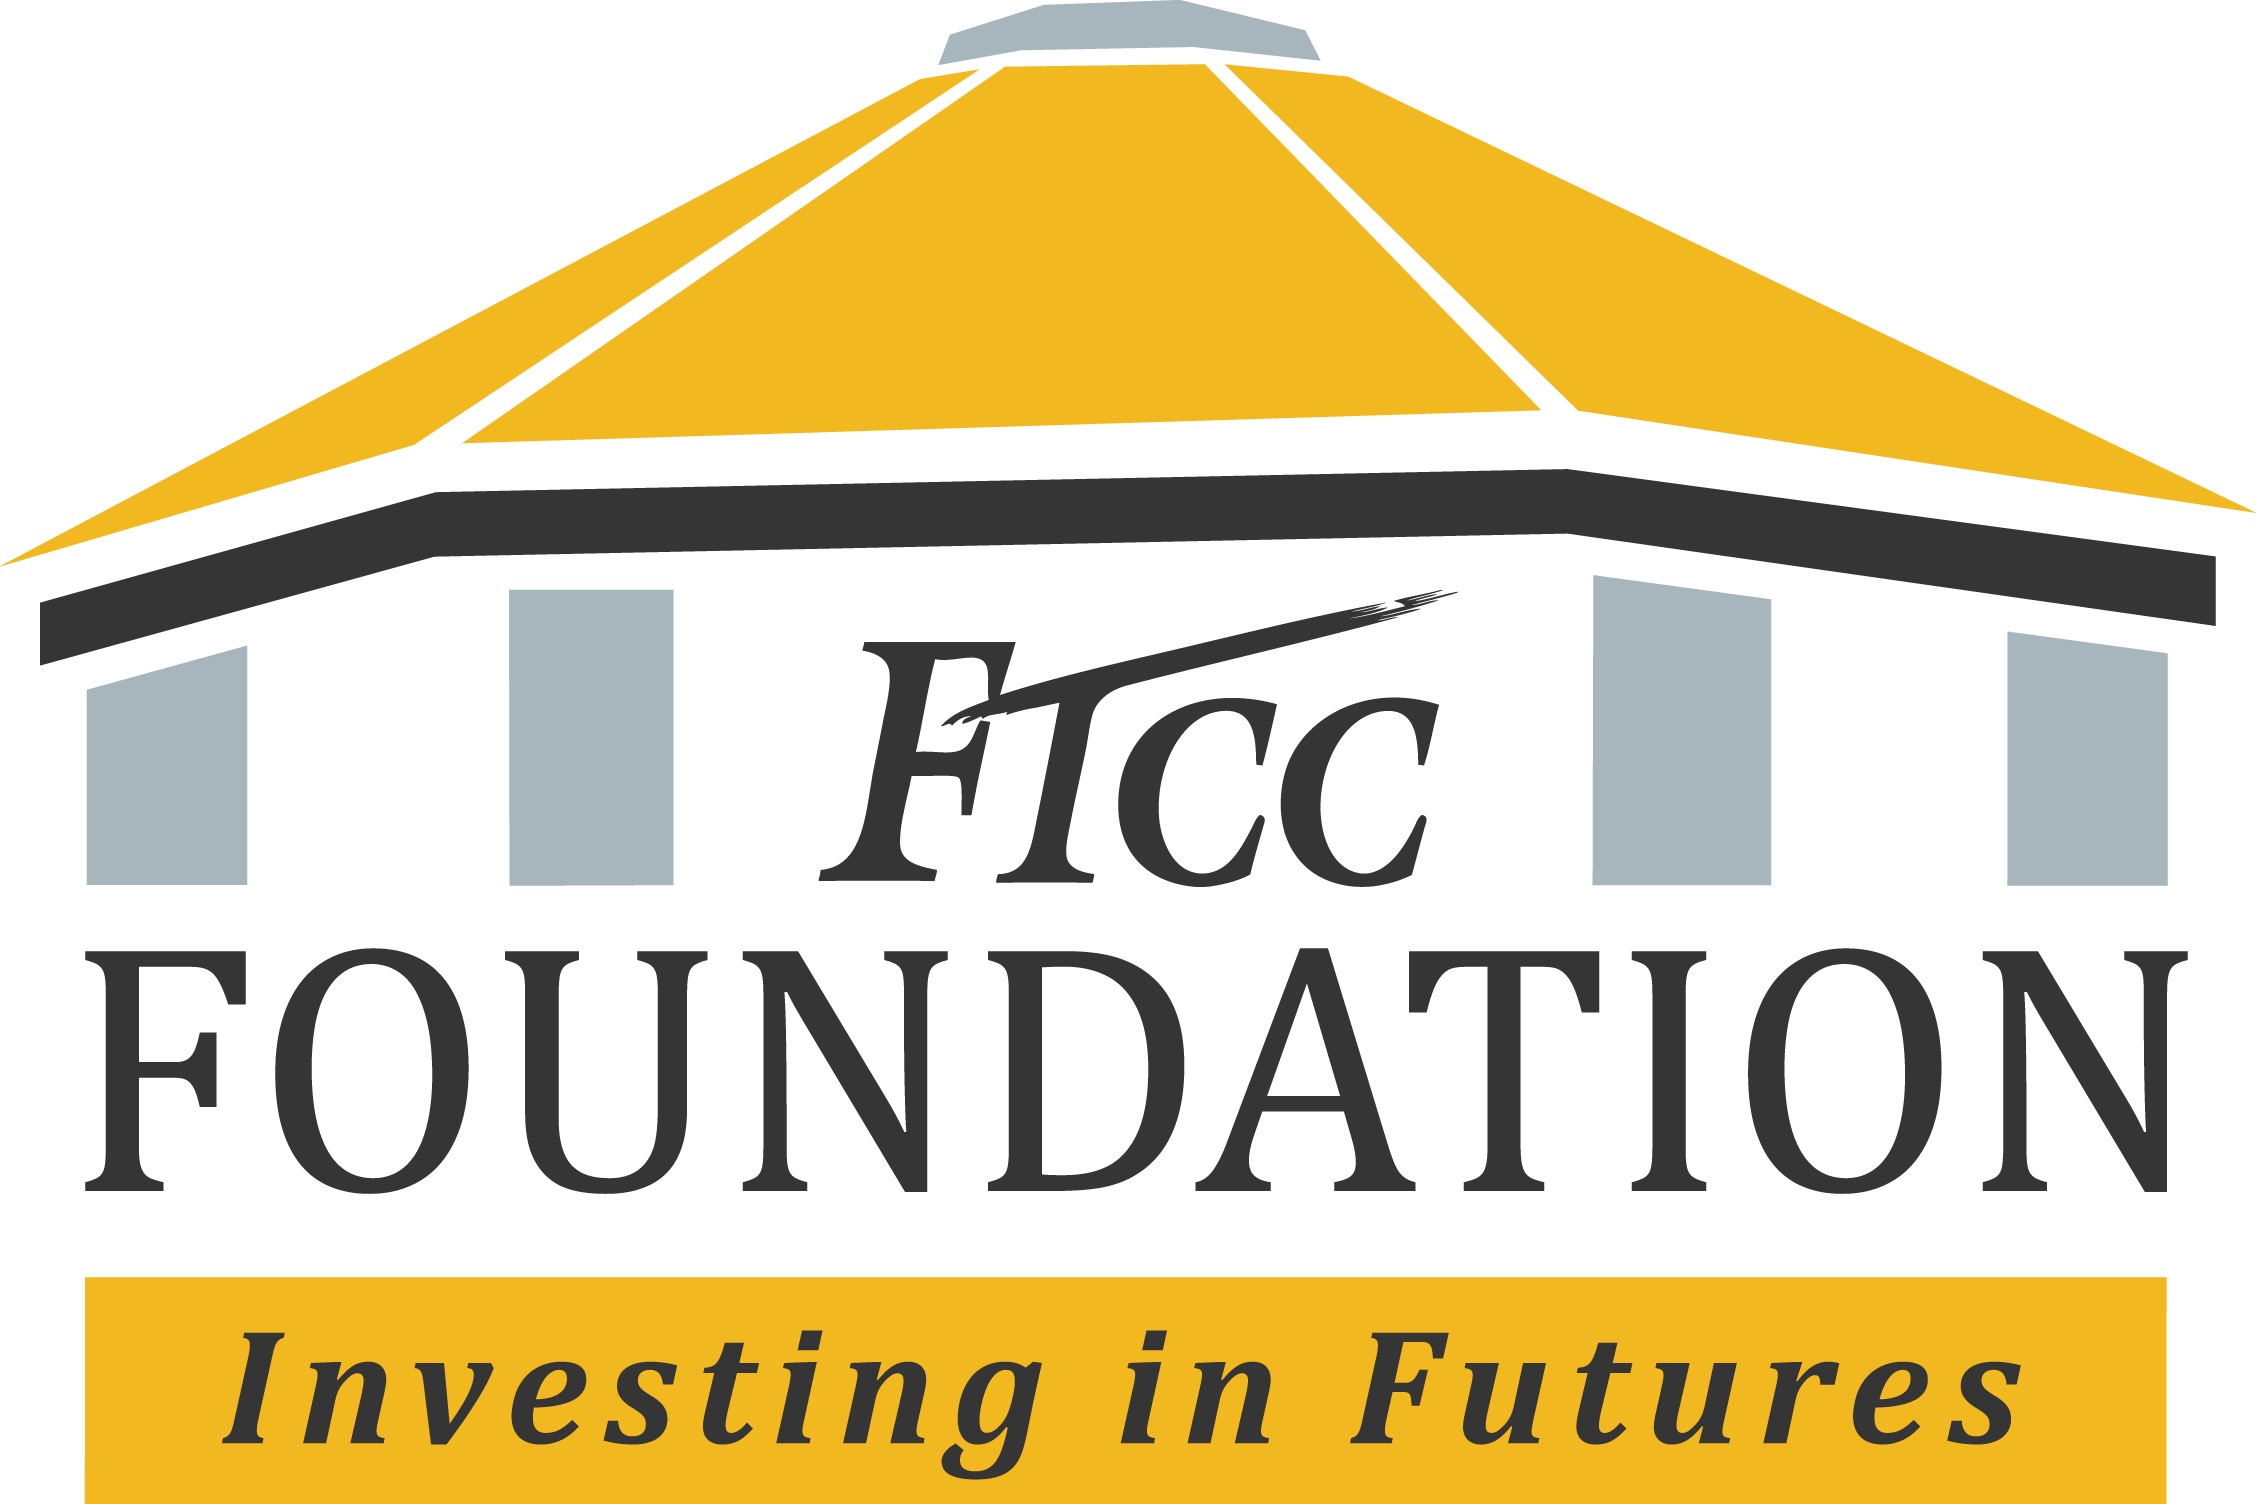 FTCC Foundation logo